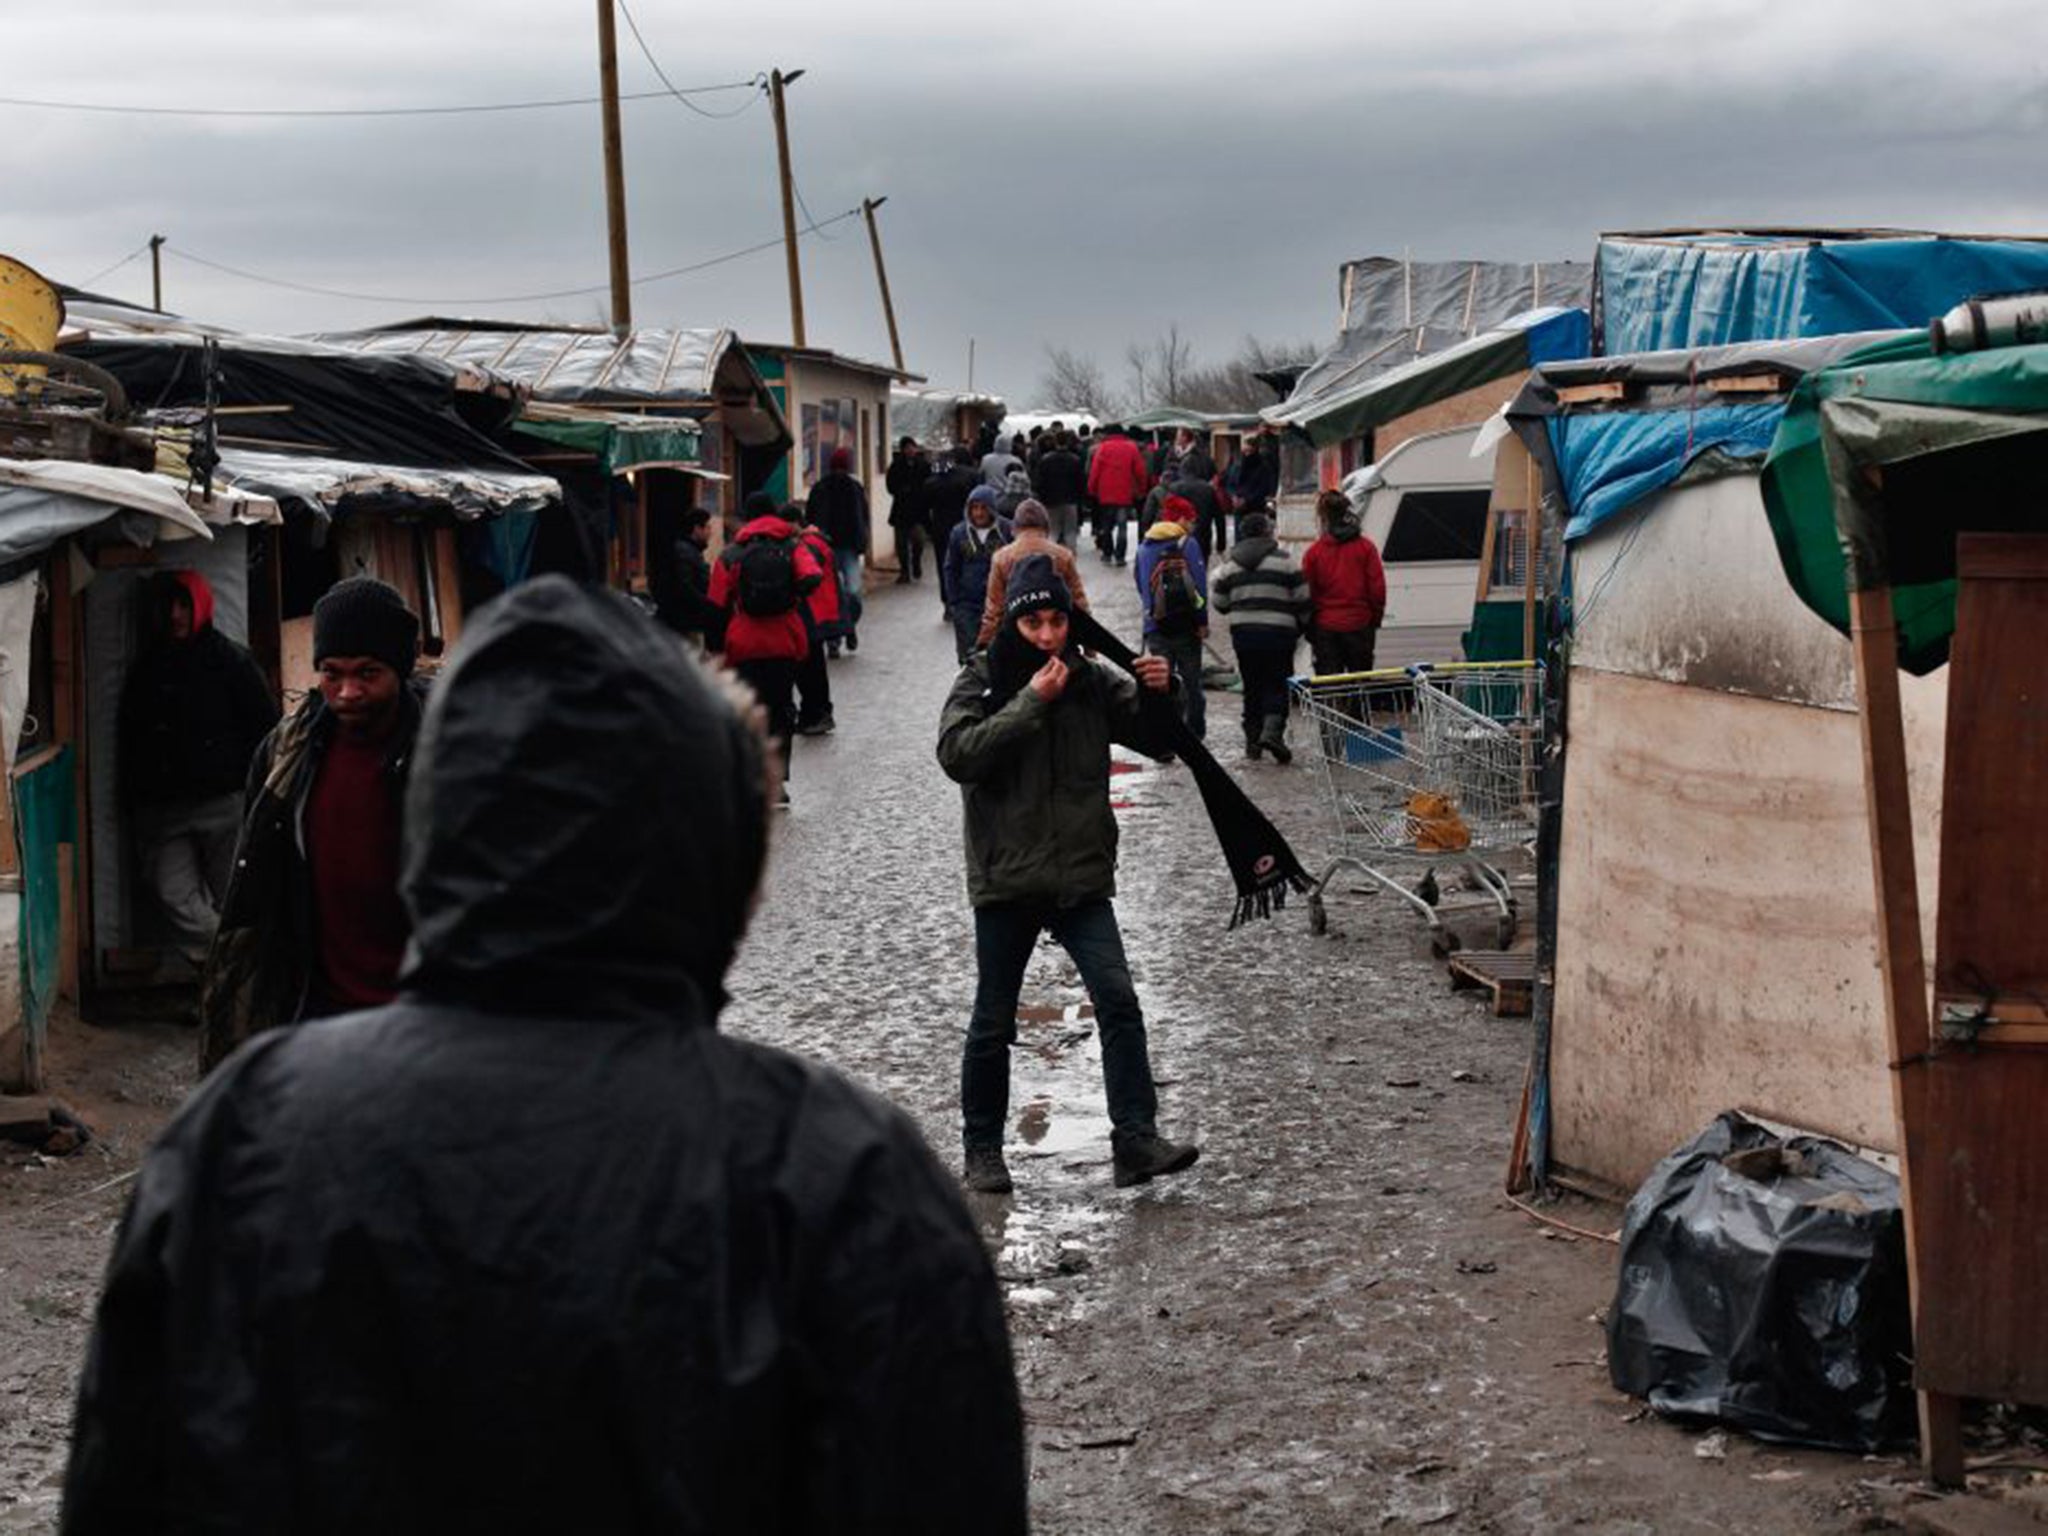 Migrants in Calais’ Jungle camp last week